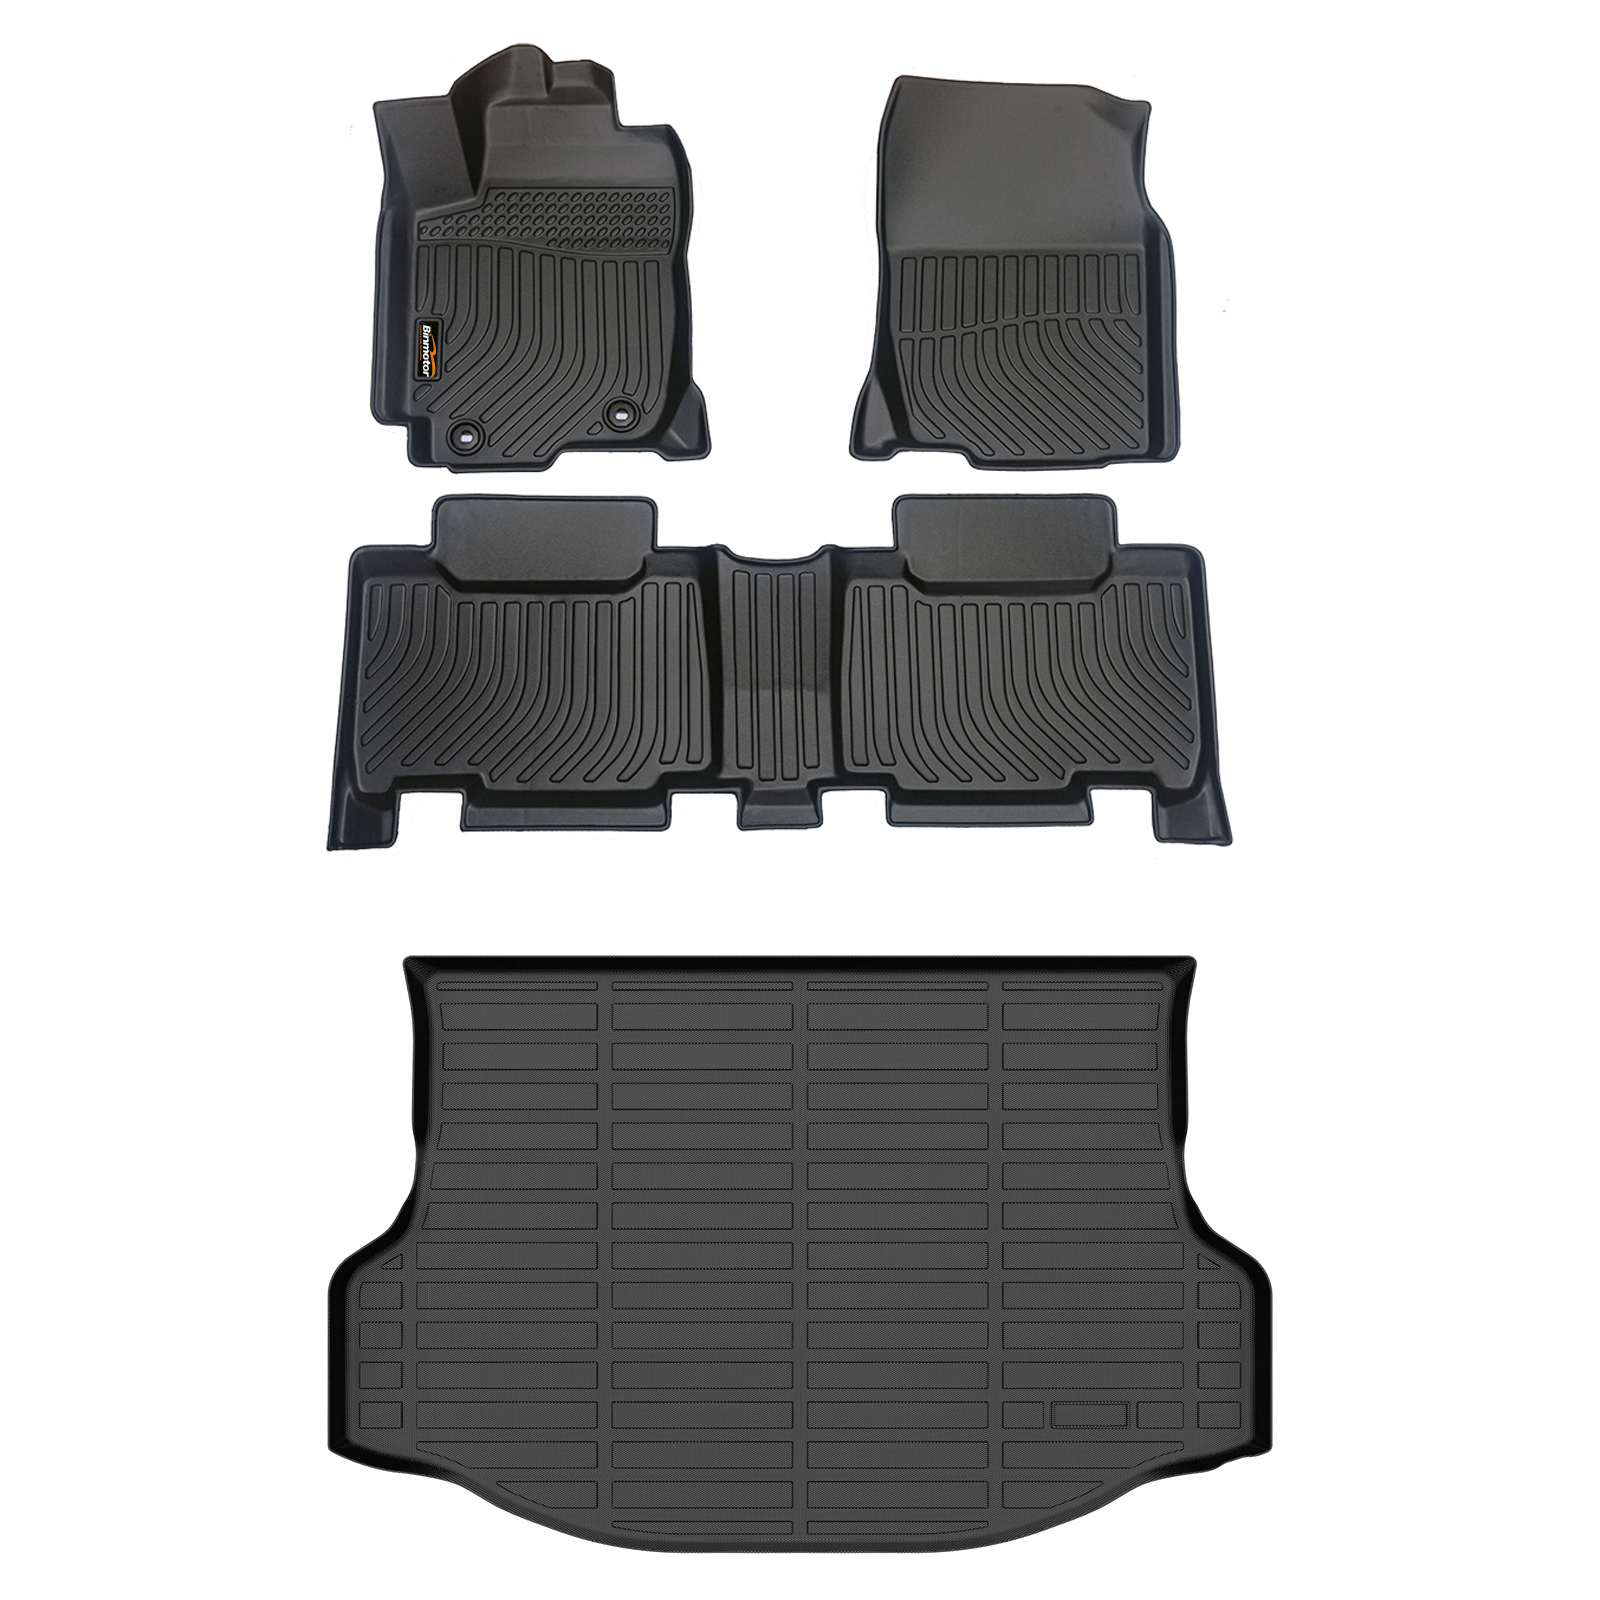 Binmotor-Floor Mats & Cargo Liner Set for Toyota RAV4 ,1st & 2nd Row Full Set, Heavy Duty Car Floor Liners-Black RAV4 Accessories（compatible year 2013-2018）